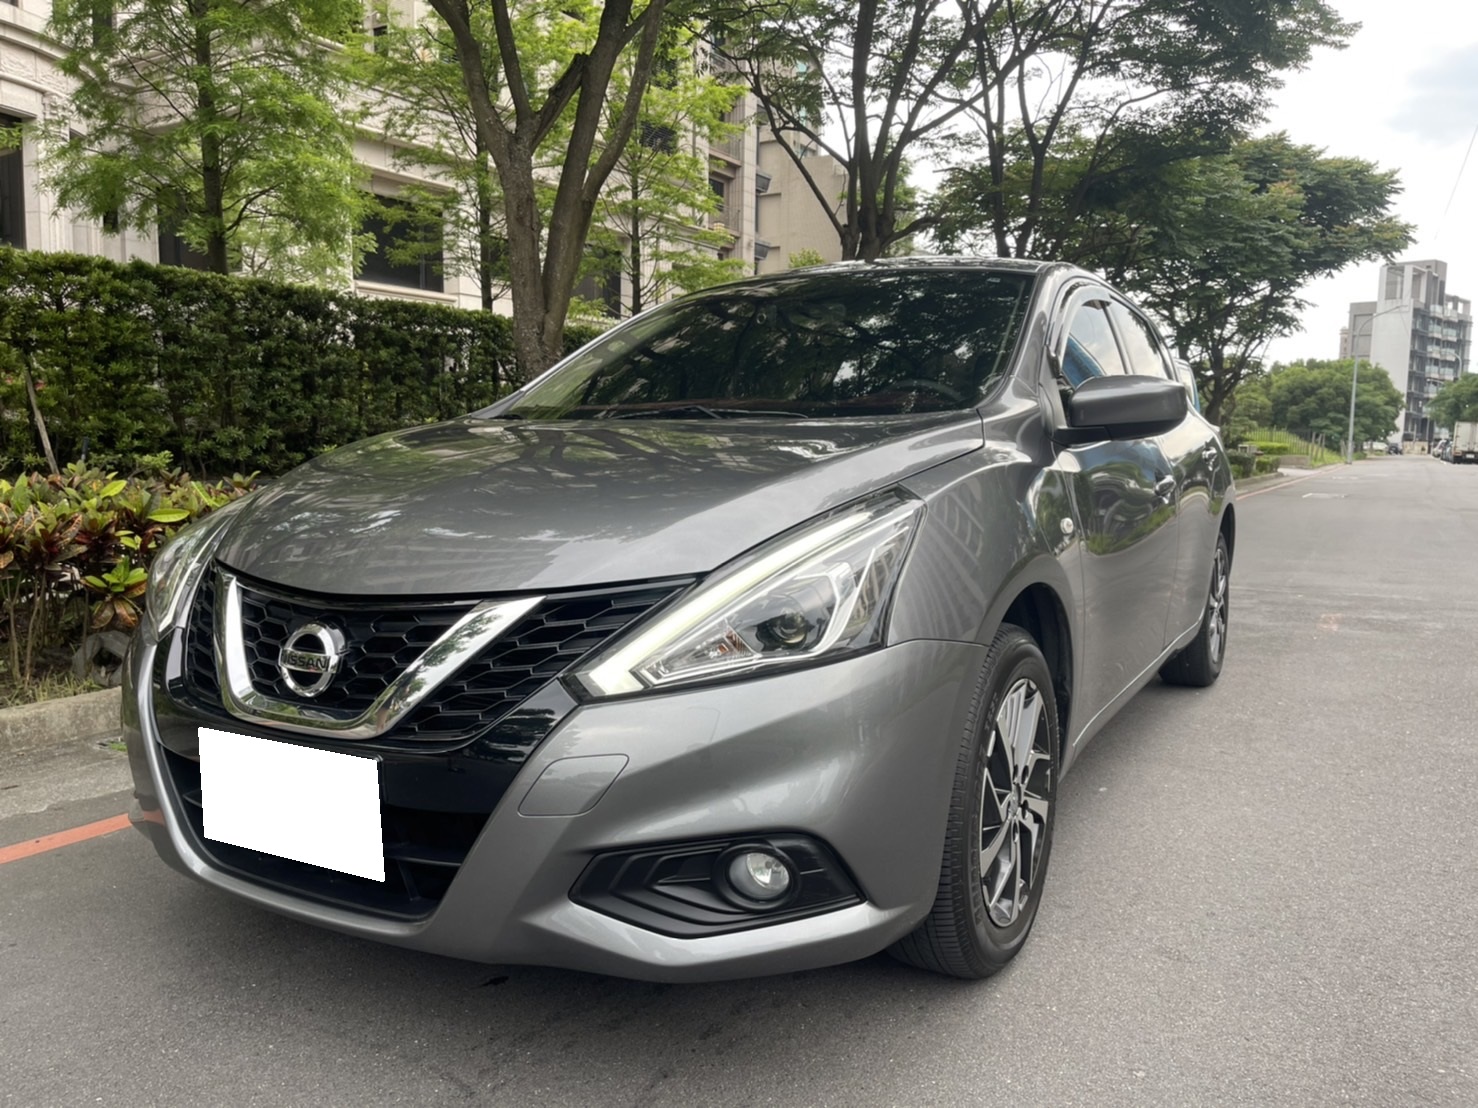 2019 Nissan 日產 Tiida 5d